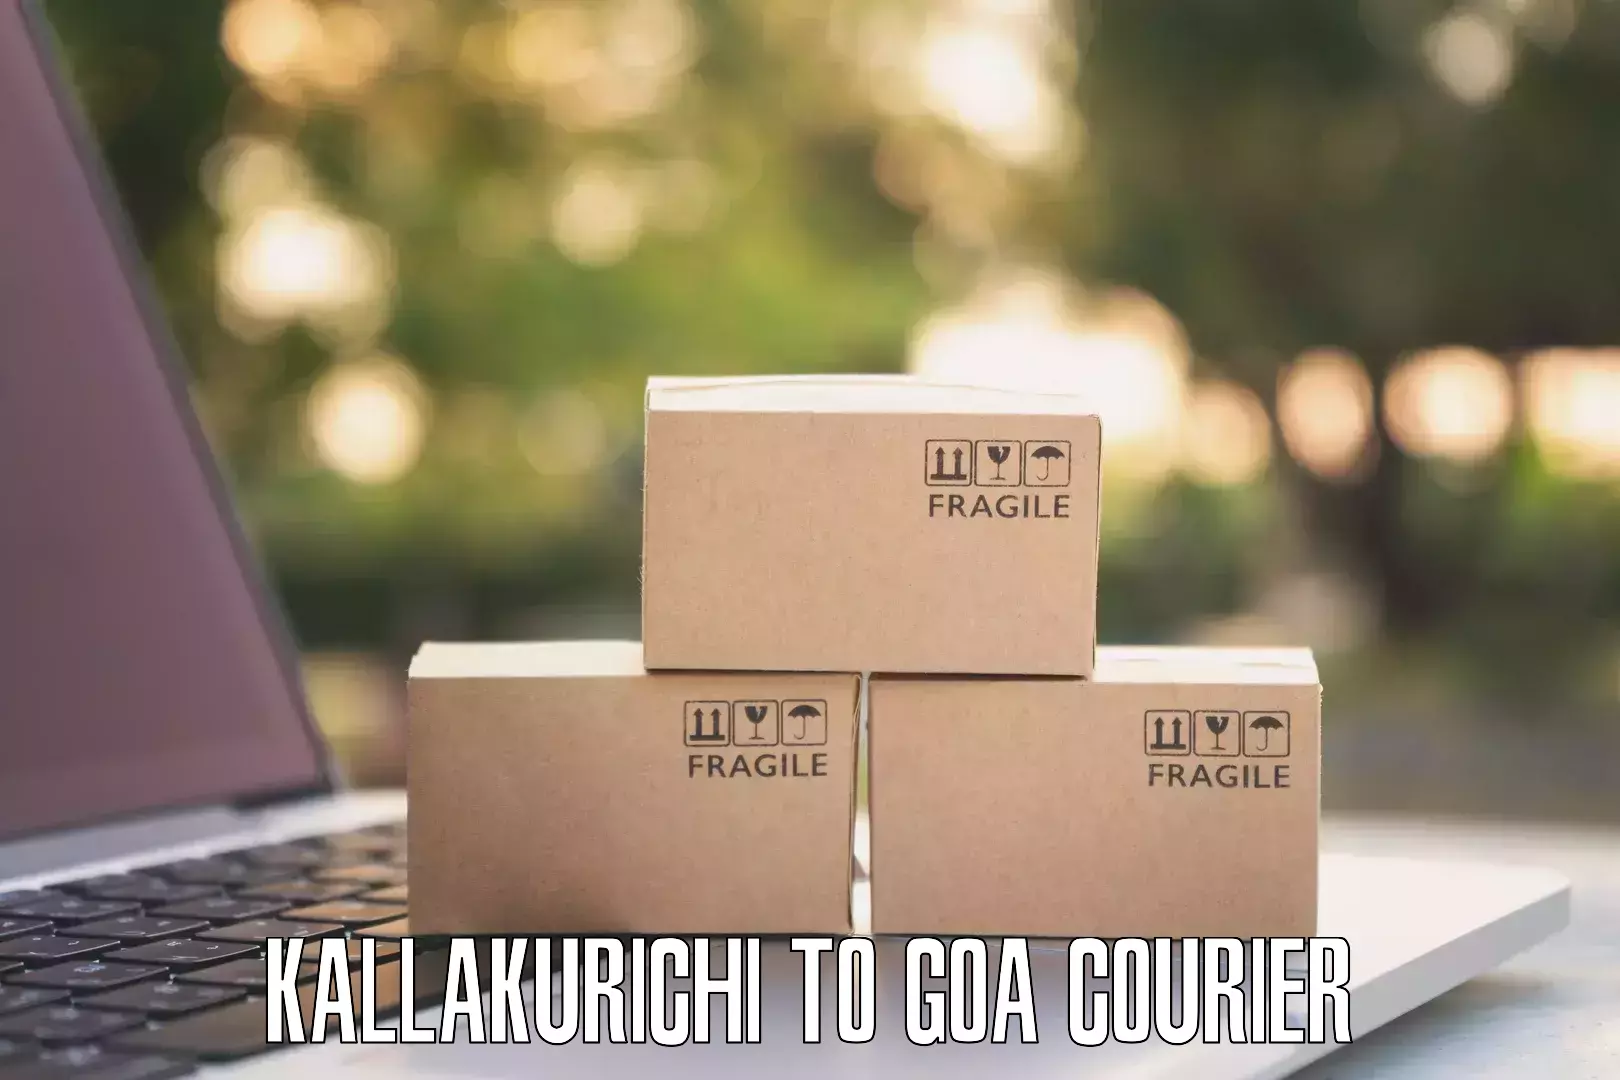 Modern courier technology Kallakurichi to South Goa